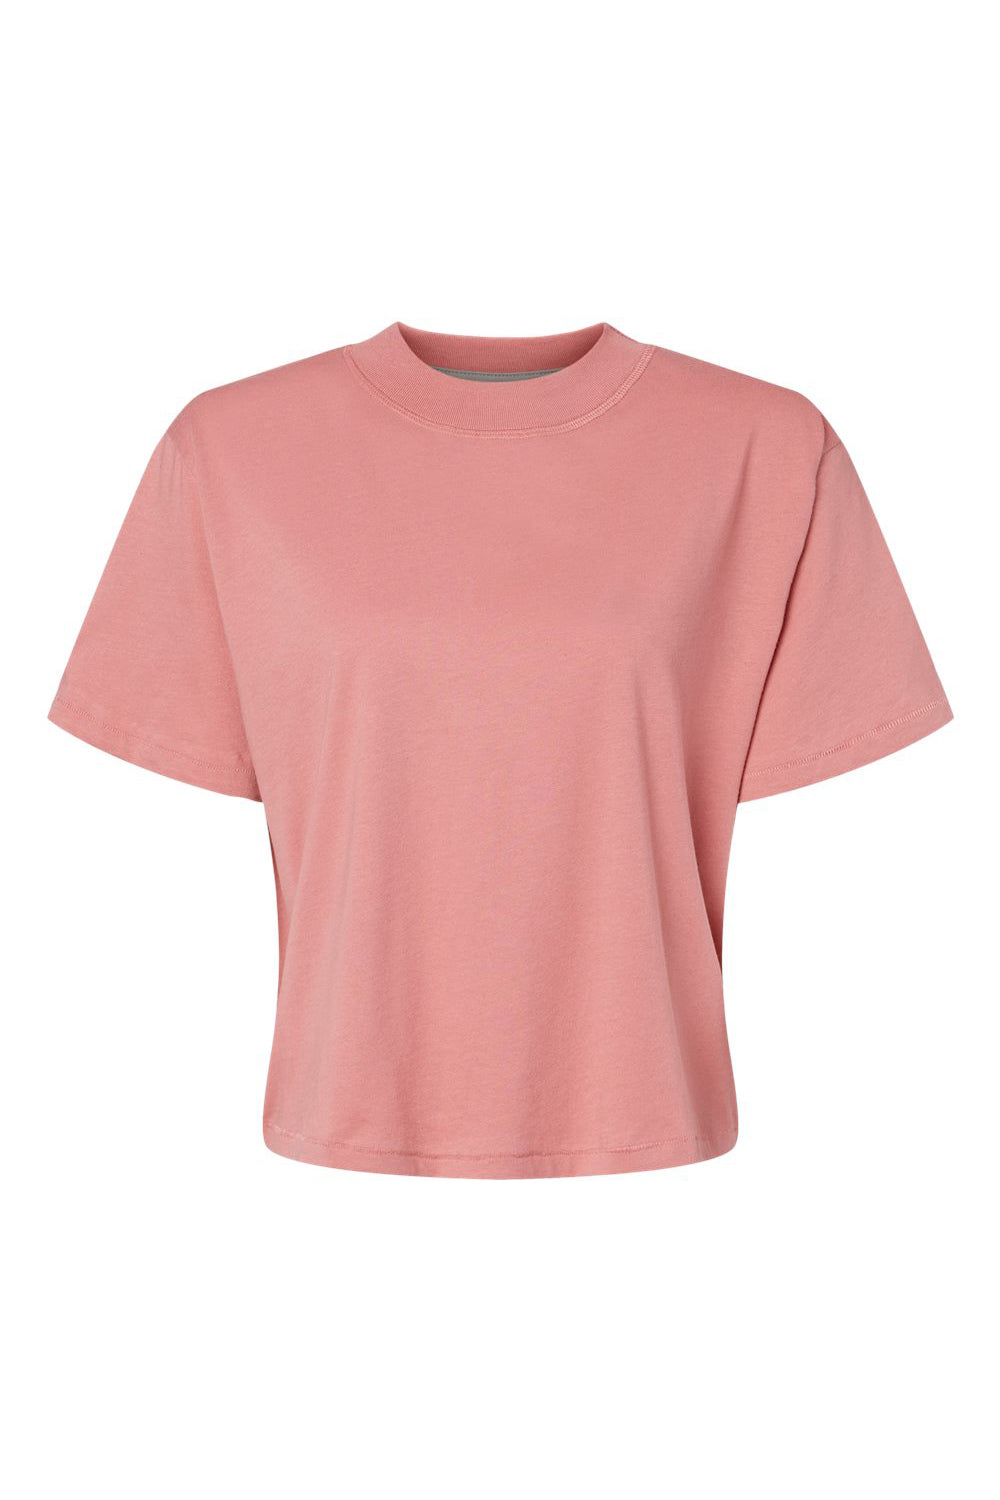 LAT 3518 Womens Boxy Short Sleeve Crewneck T-Shirt Mauvelous Pink Flat Front